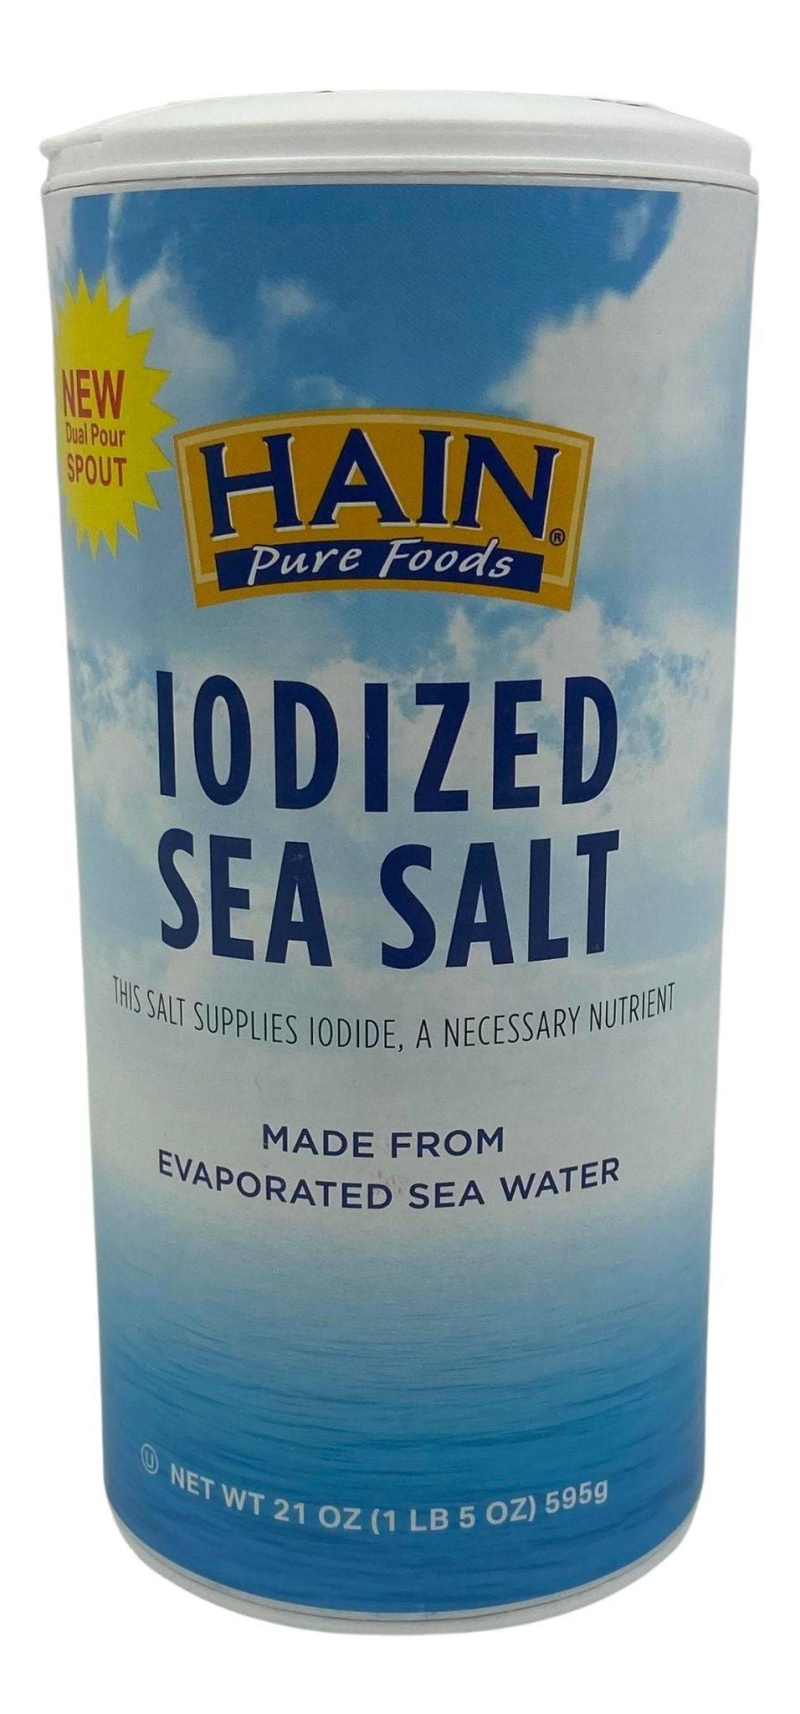 Sea Salt, Iodized - 21 Oz